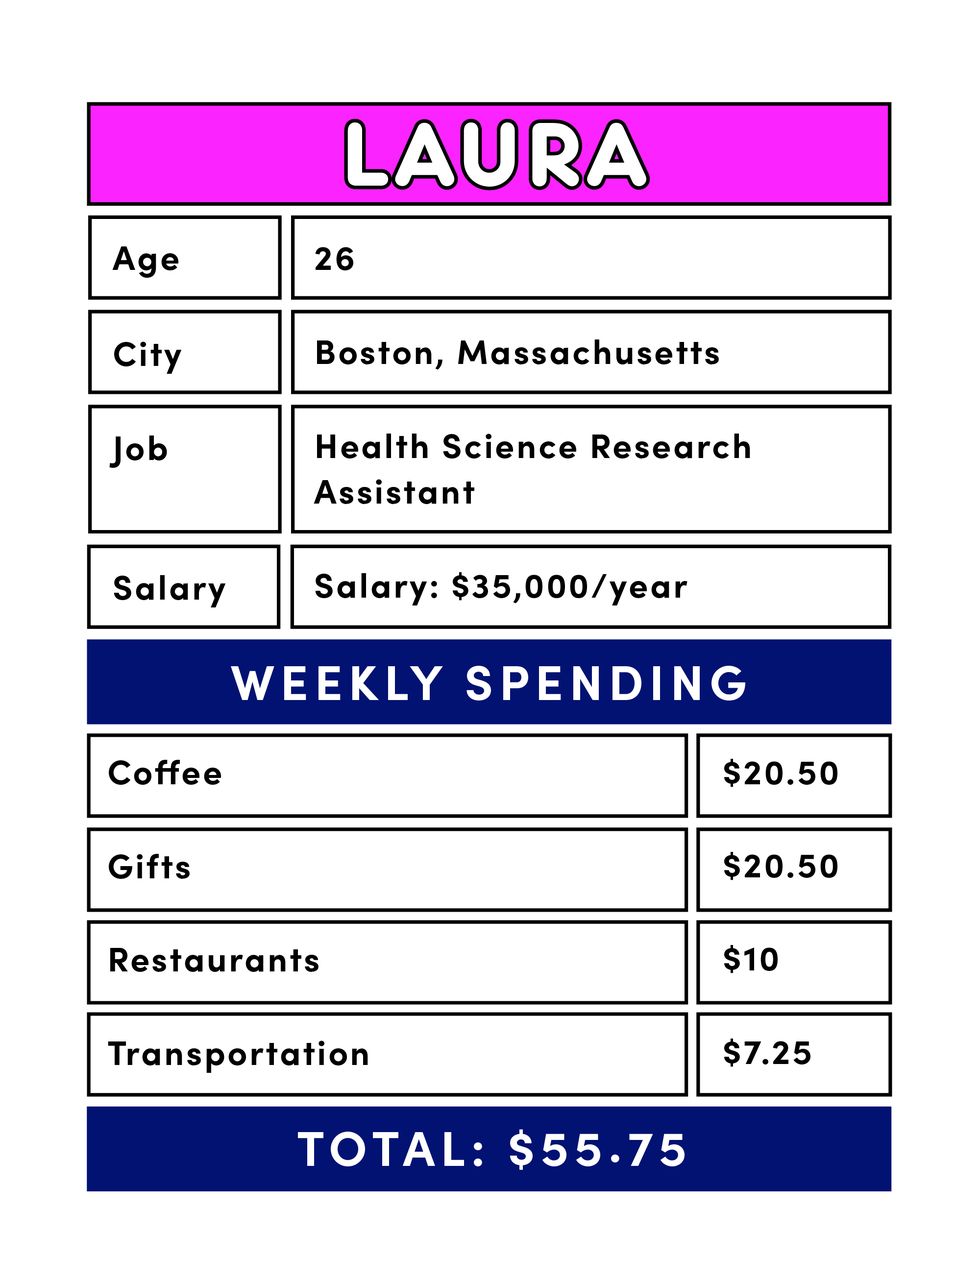 Laura Spending